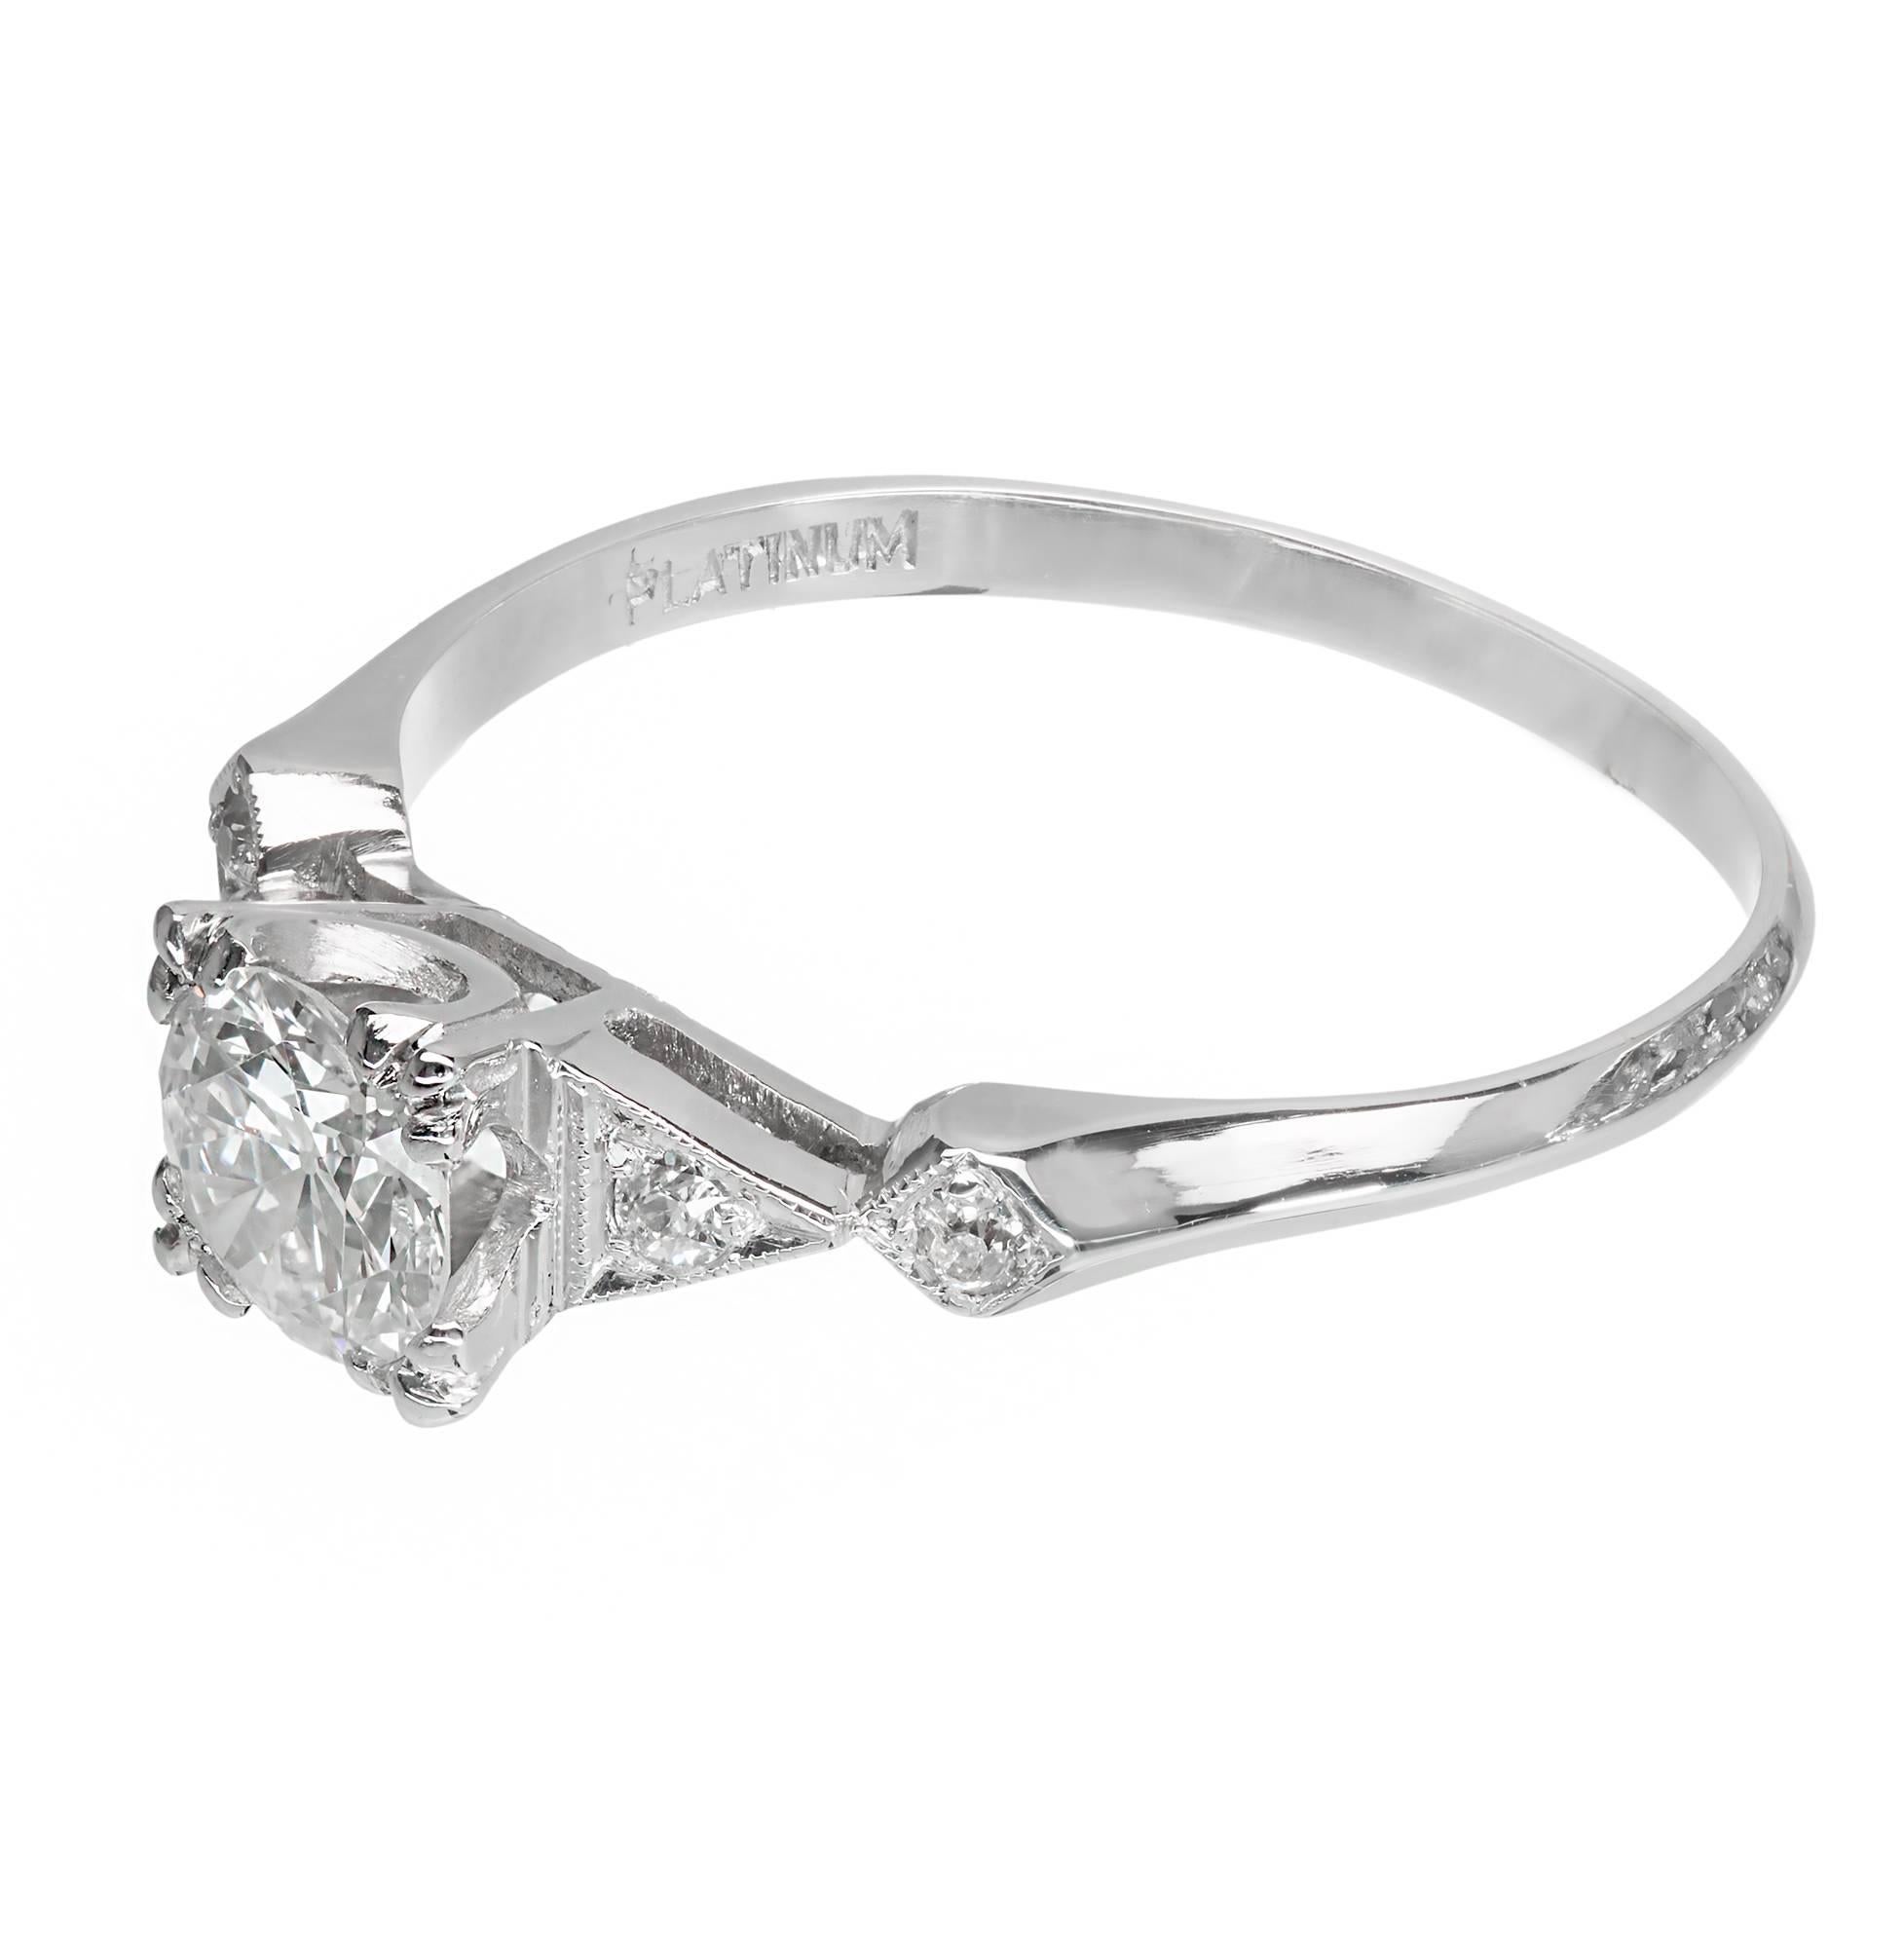  .75 Carat EGL Certified Traditional Cut Diamond Platinum Engagement Ring 2